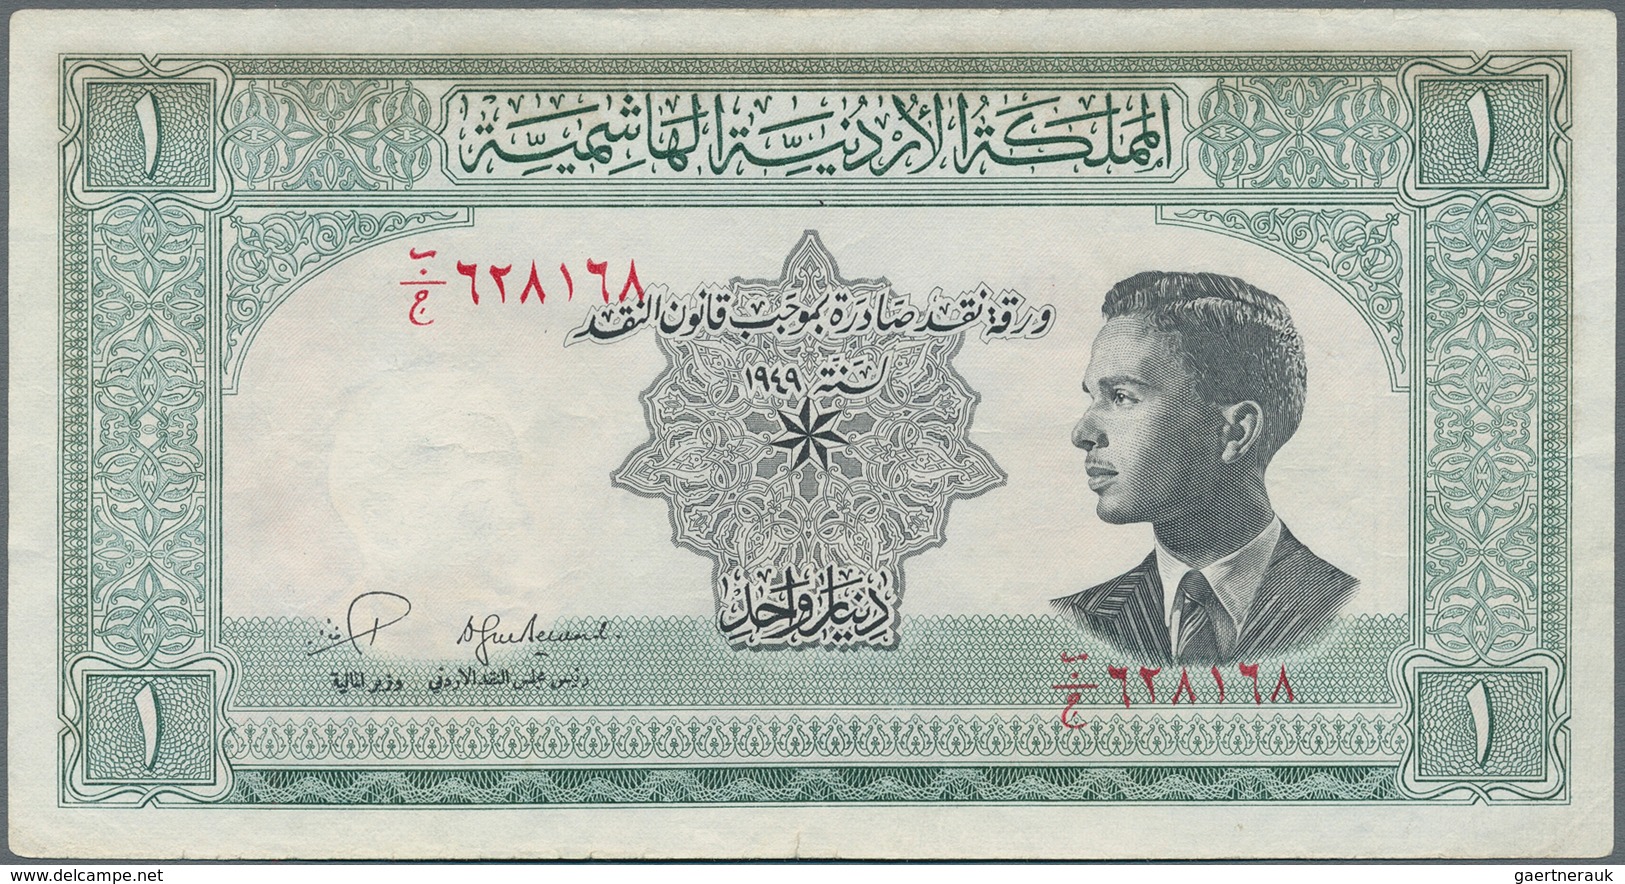 Jordan / Jordanien: 1 Dinar L.1949 (1952), P.6, Still Nice Note With Strong Paper, Probably Pressed - Jordanien